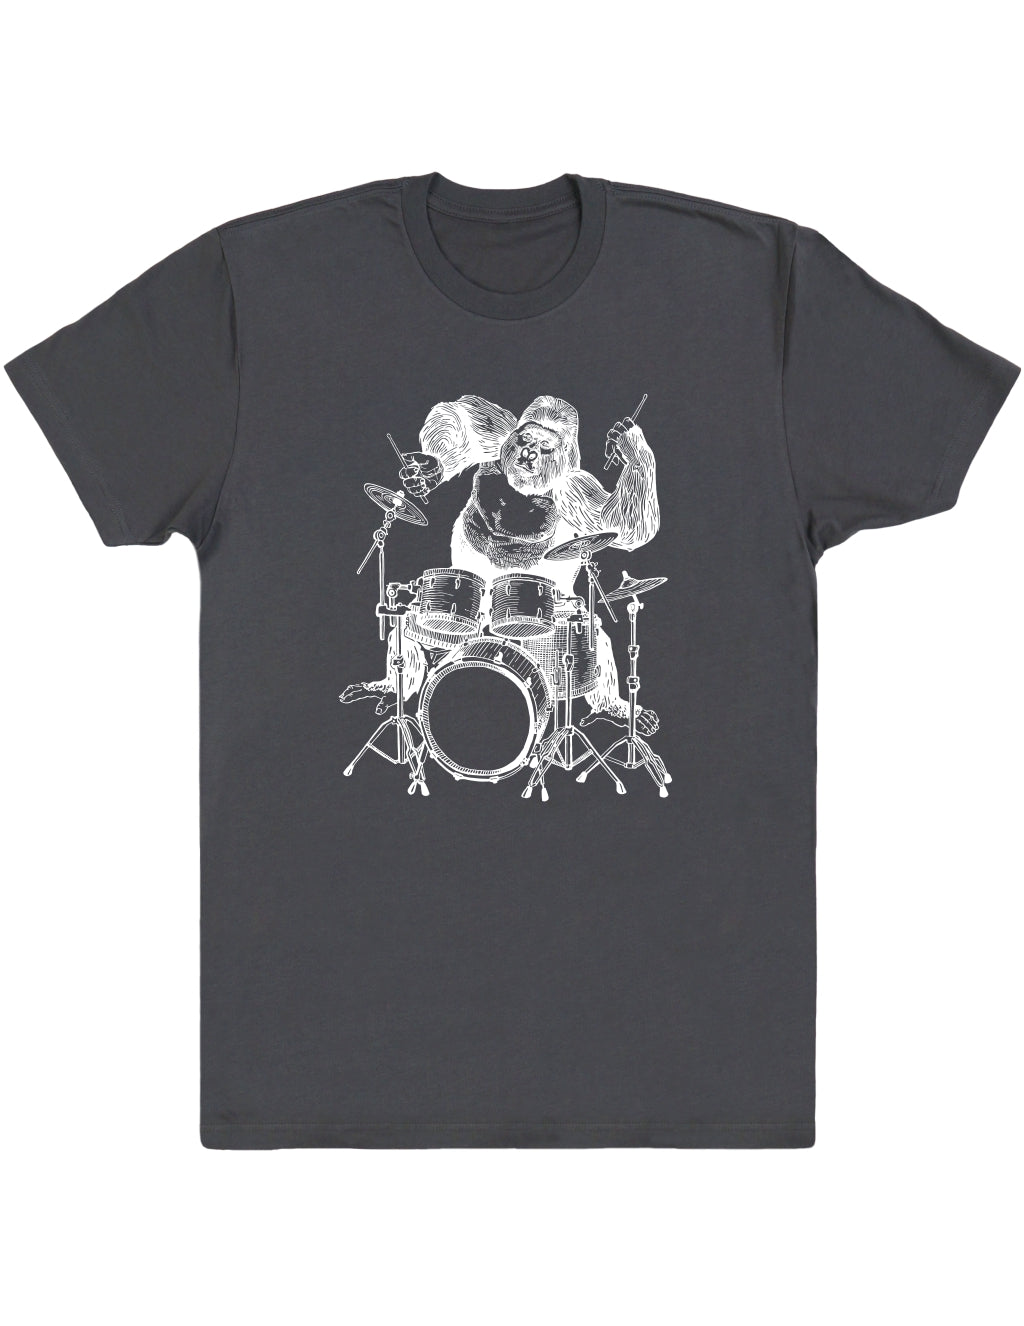 SEEMBO Gorilla Playing Drums Men's Cotton T-Shirt